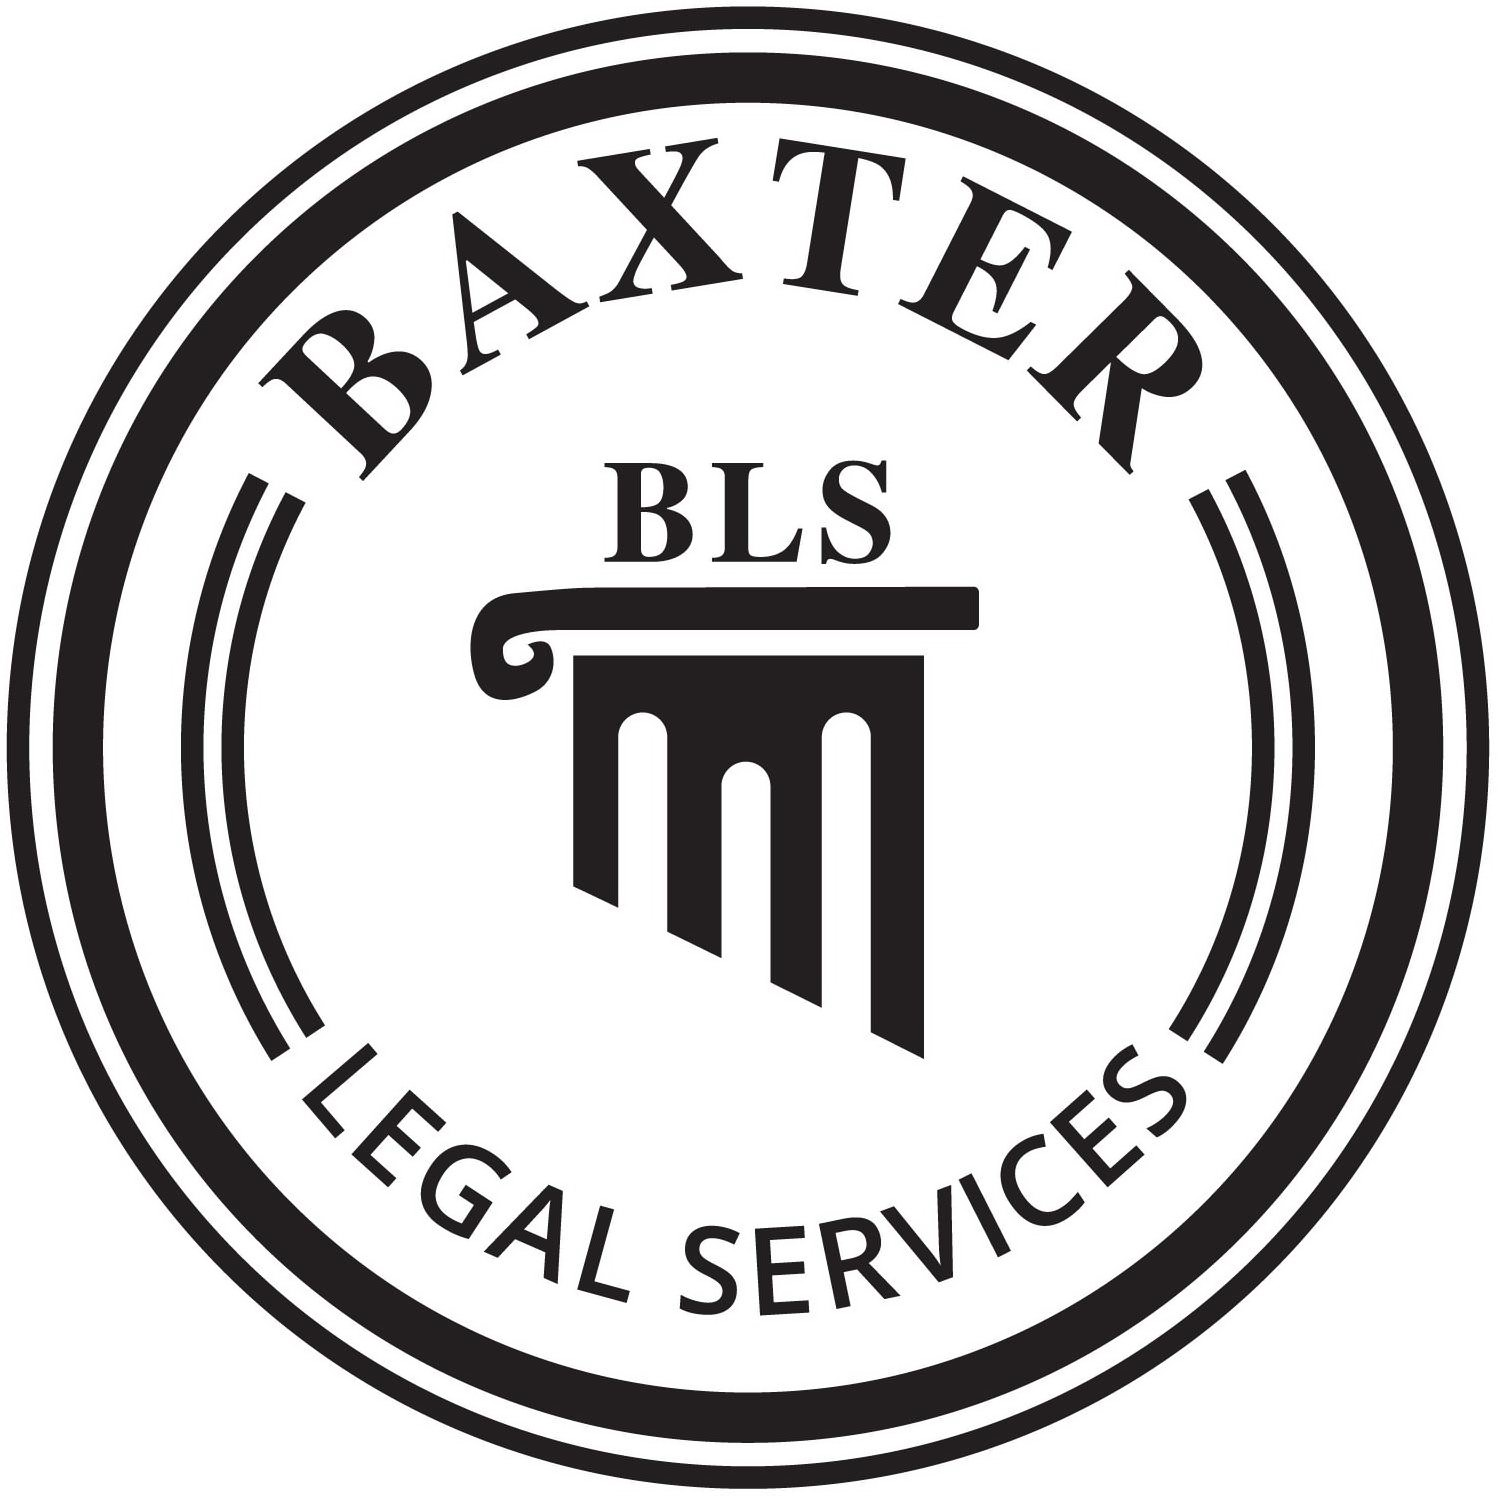  BAXTER, BLS, LEGAL SERVICES